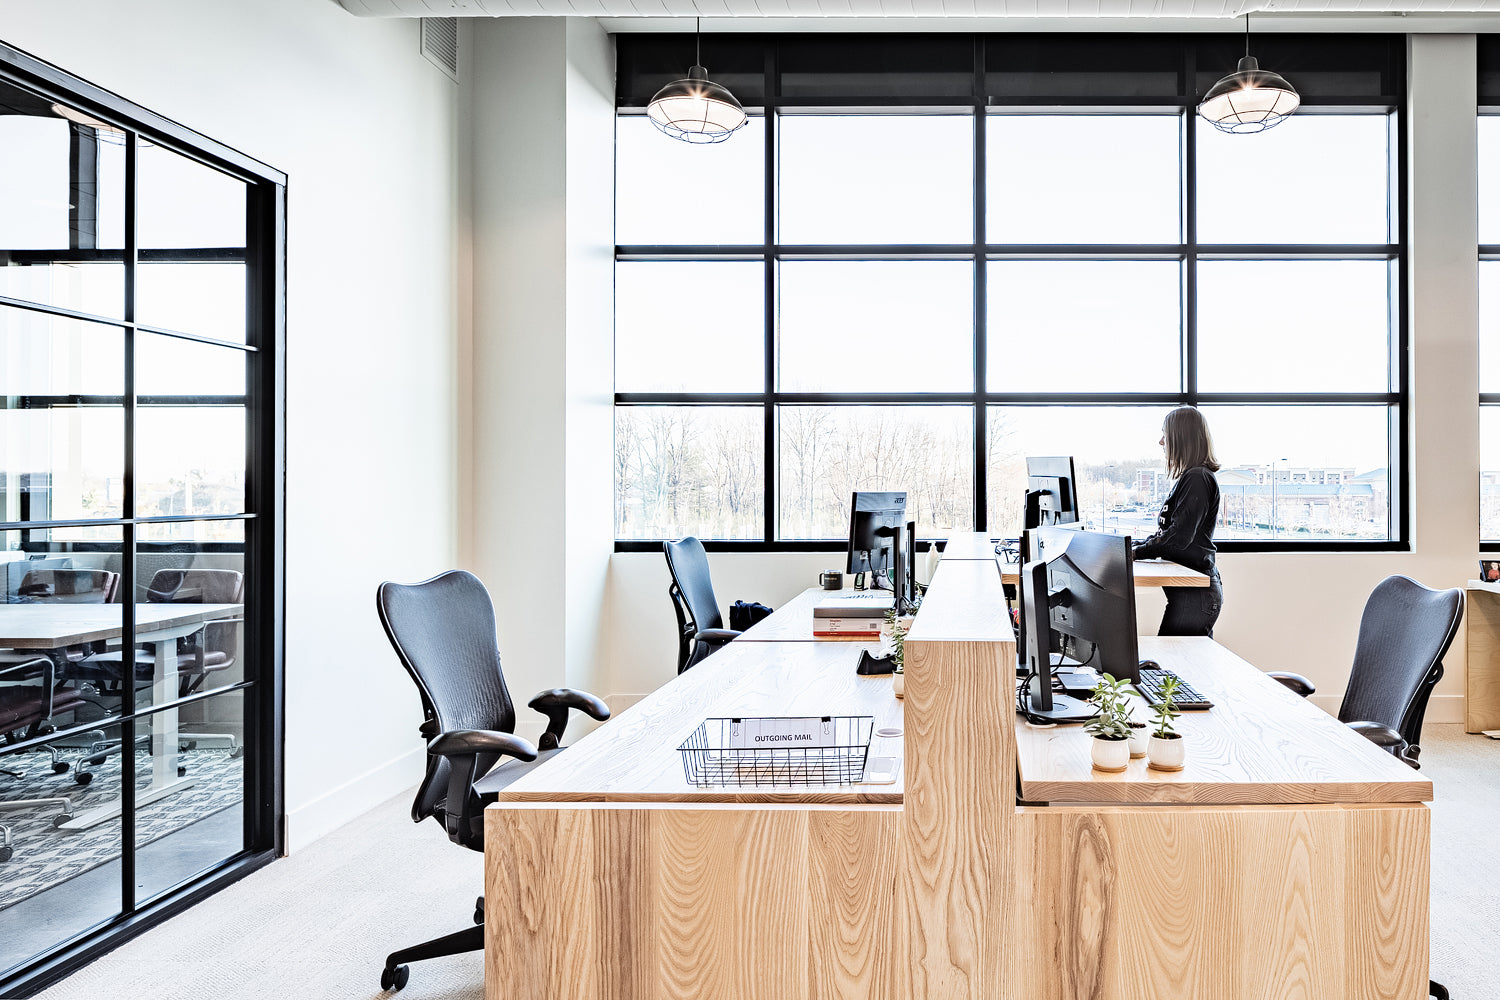 Work stations by Edgework Creative, adjustable height desks